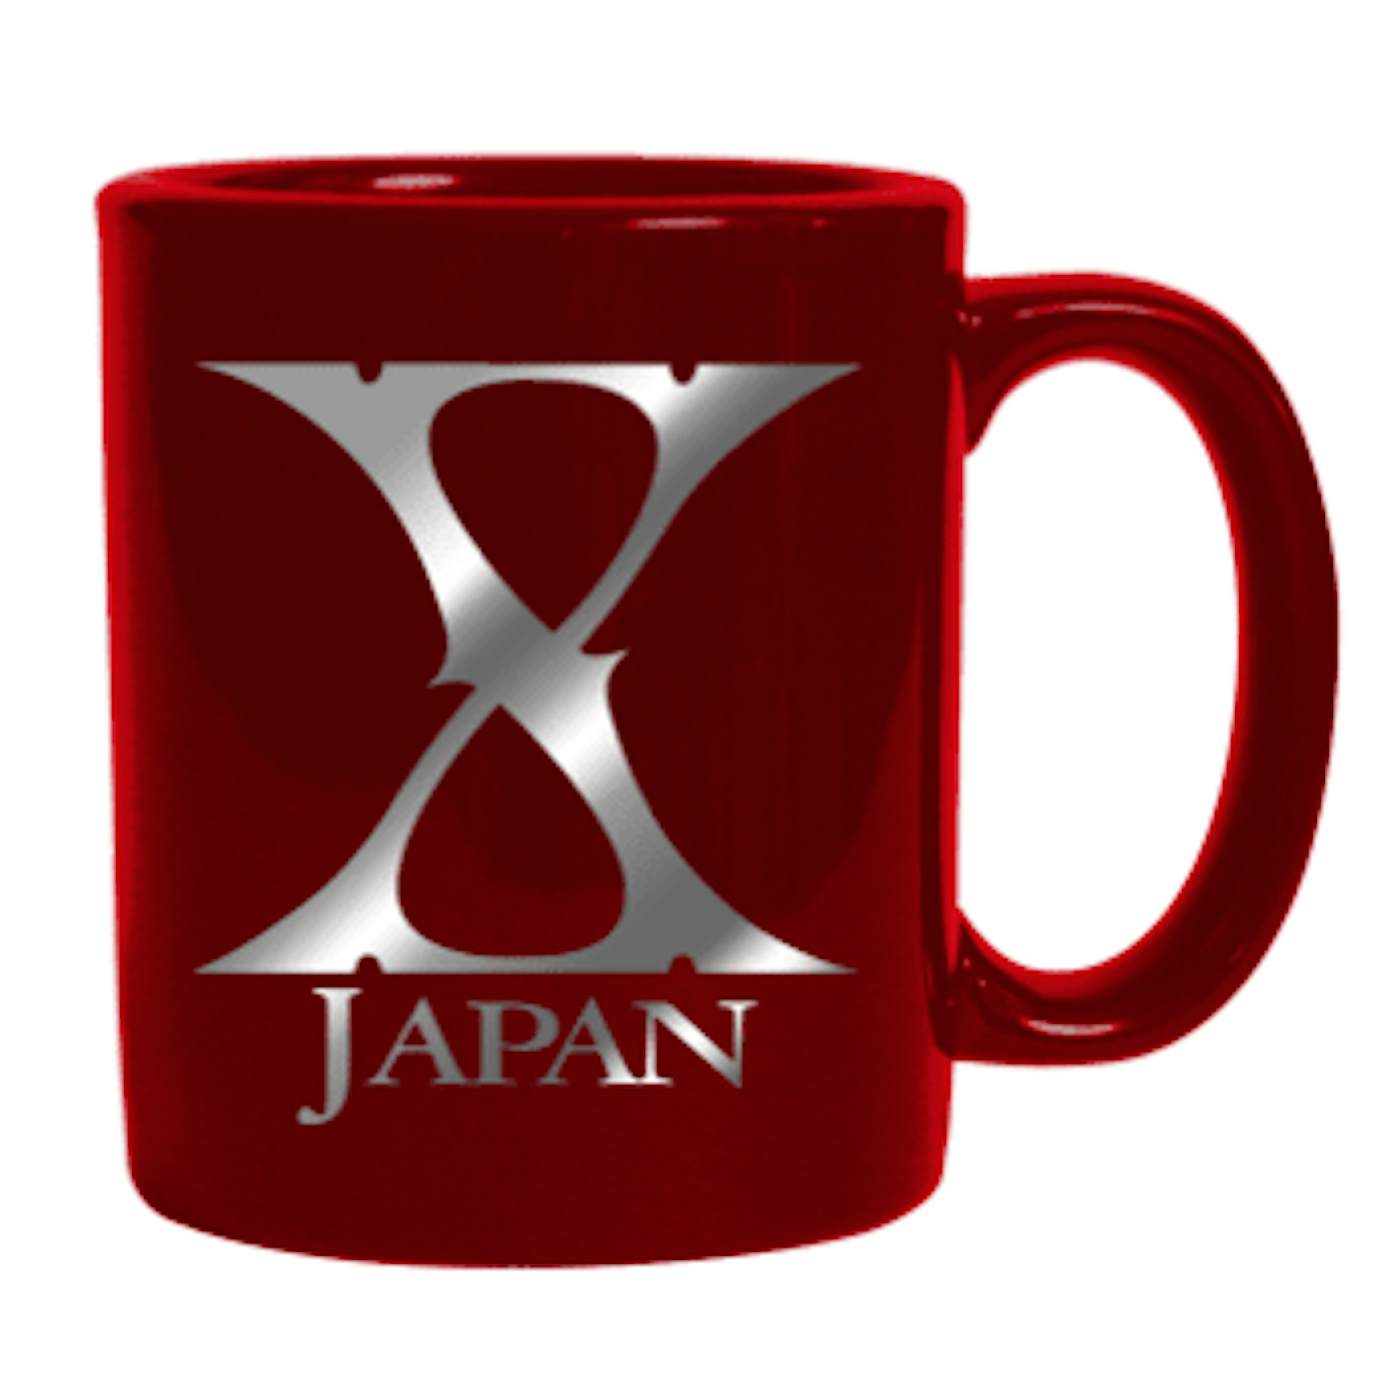 X Japan Coffee Mug